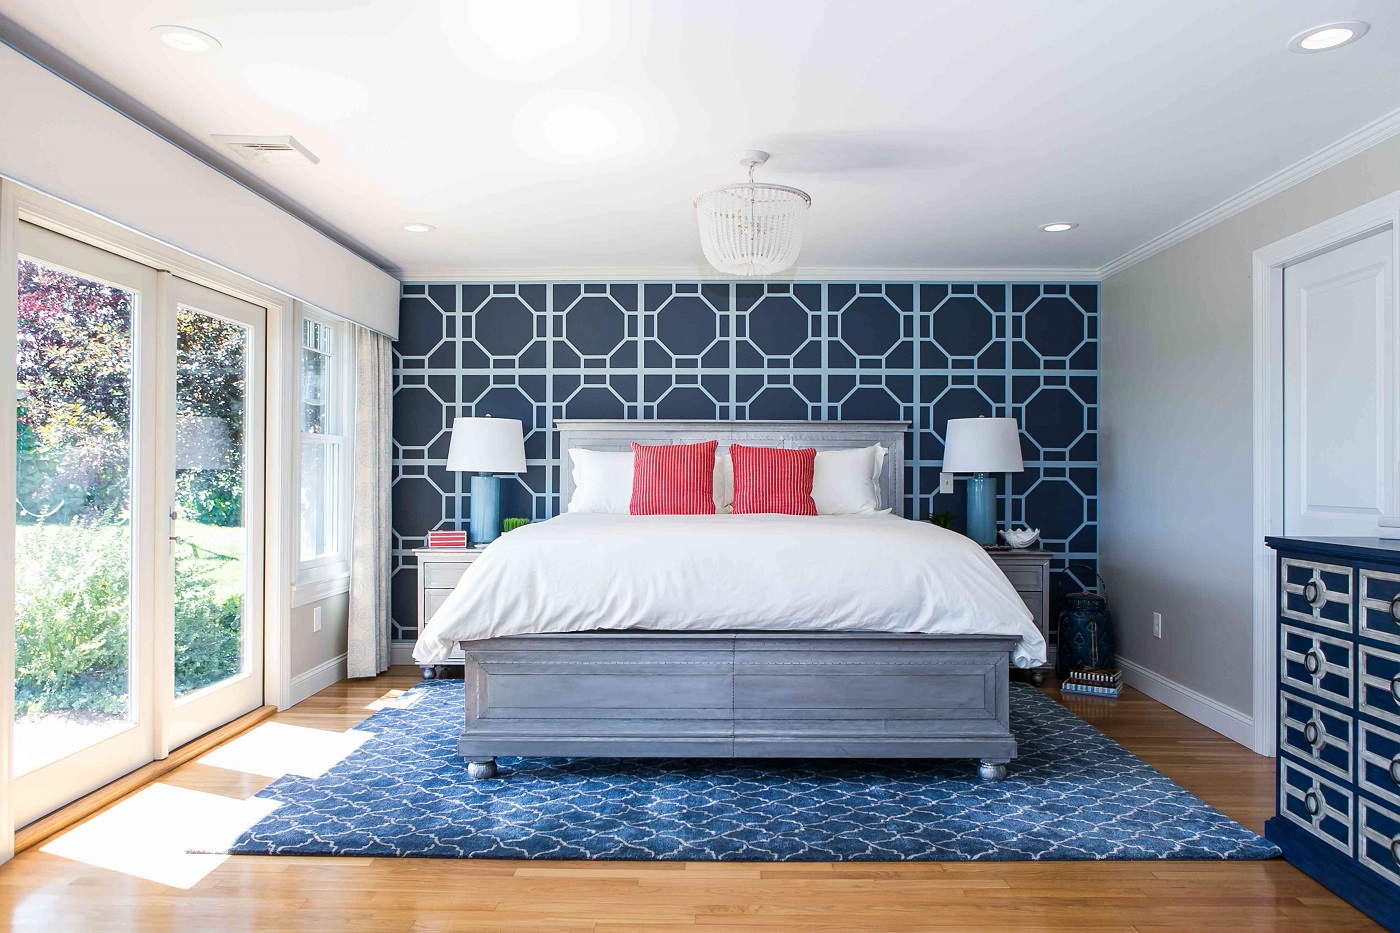 Dormitorio Azul Oscuro - 4 Ideas Perfectas para el Dormitorio Azul Marino que Debes Probar